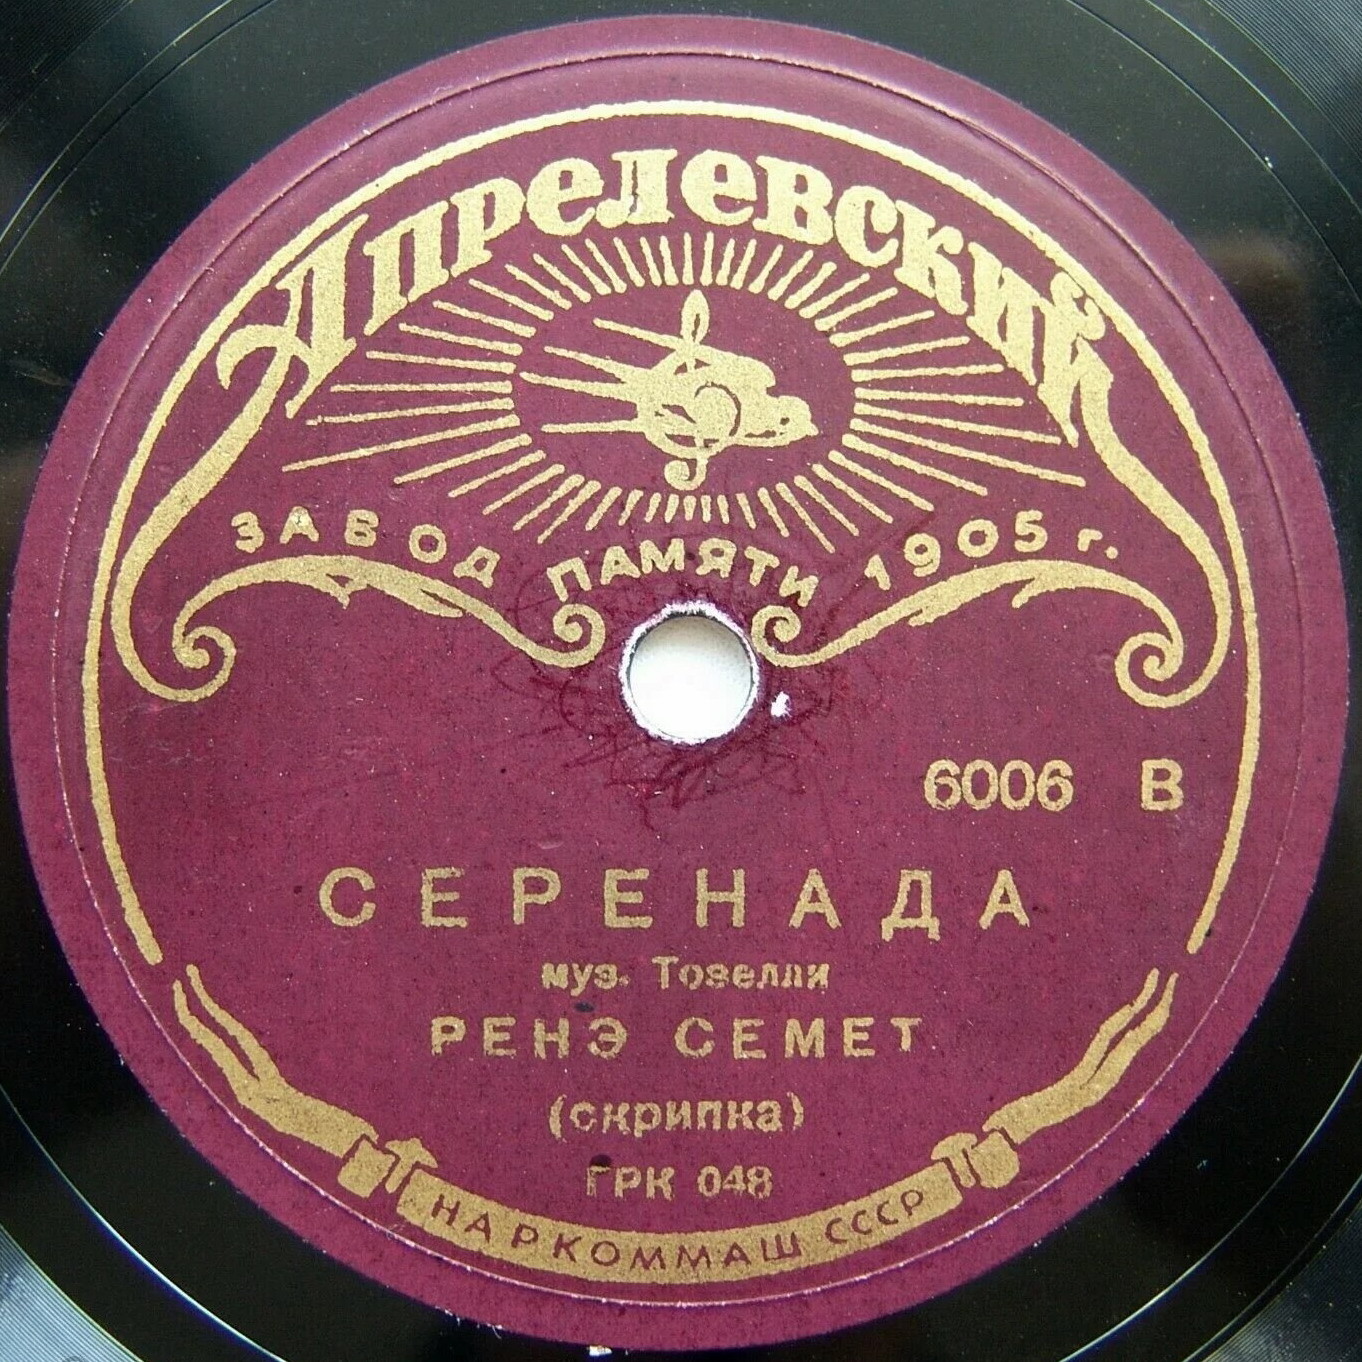 Ренэ Семет (скрипка) - Серенада / Серенада